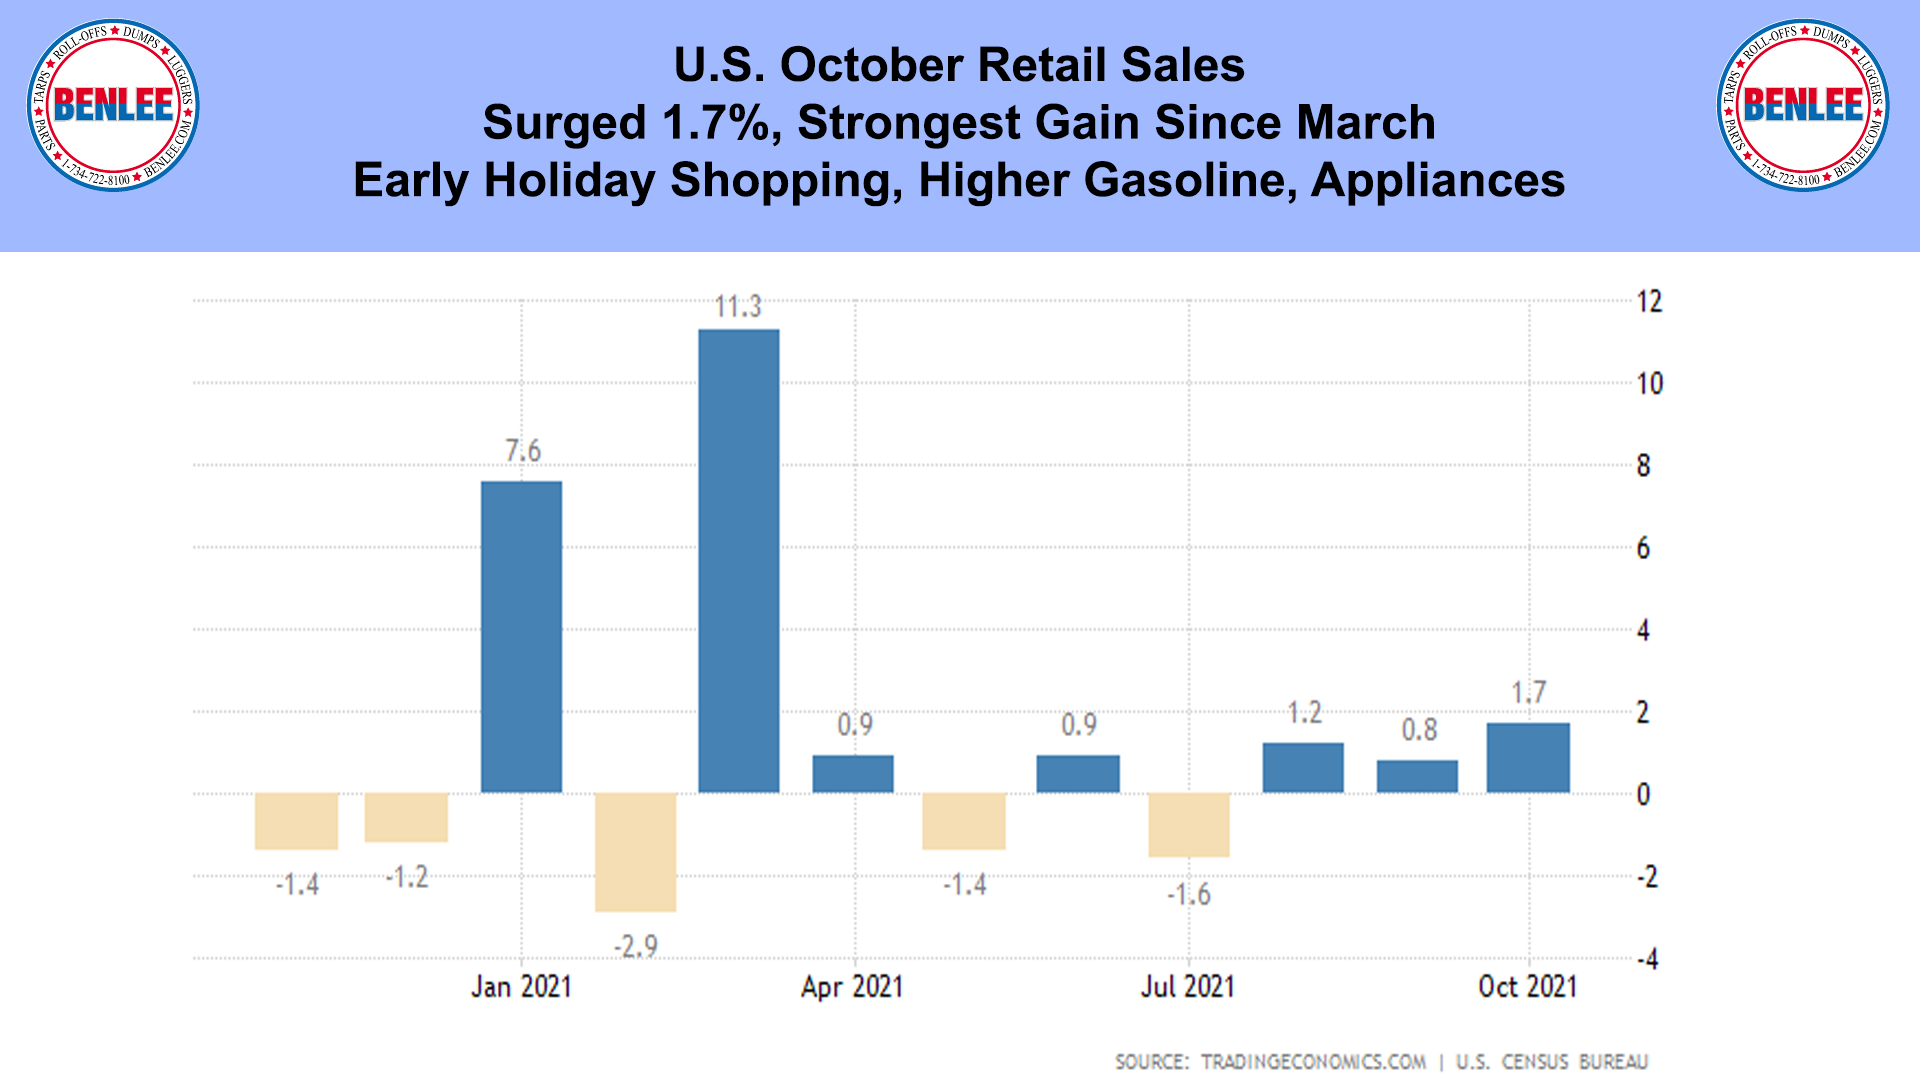 U.S. October Retail Sales